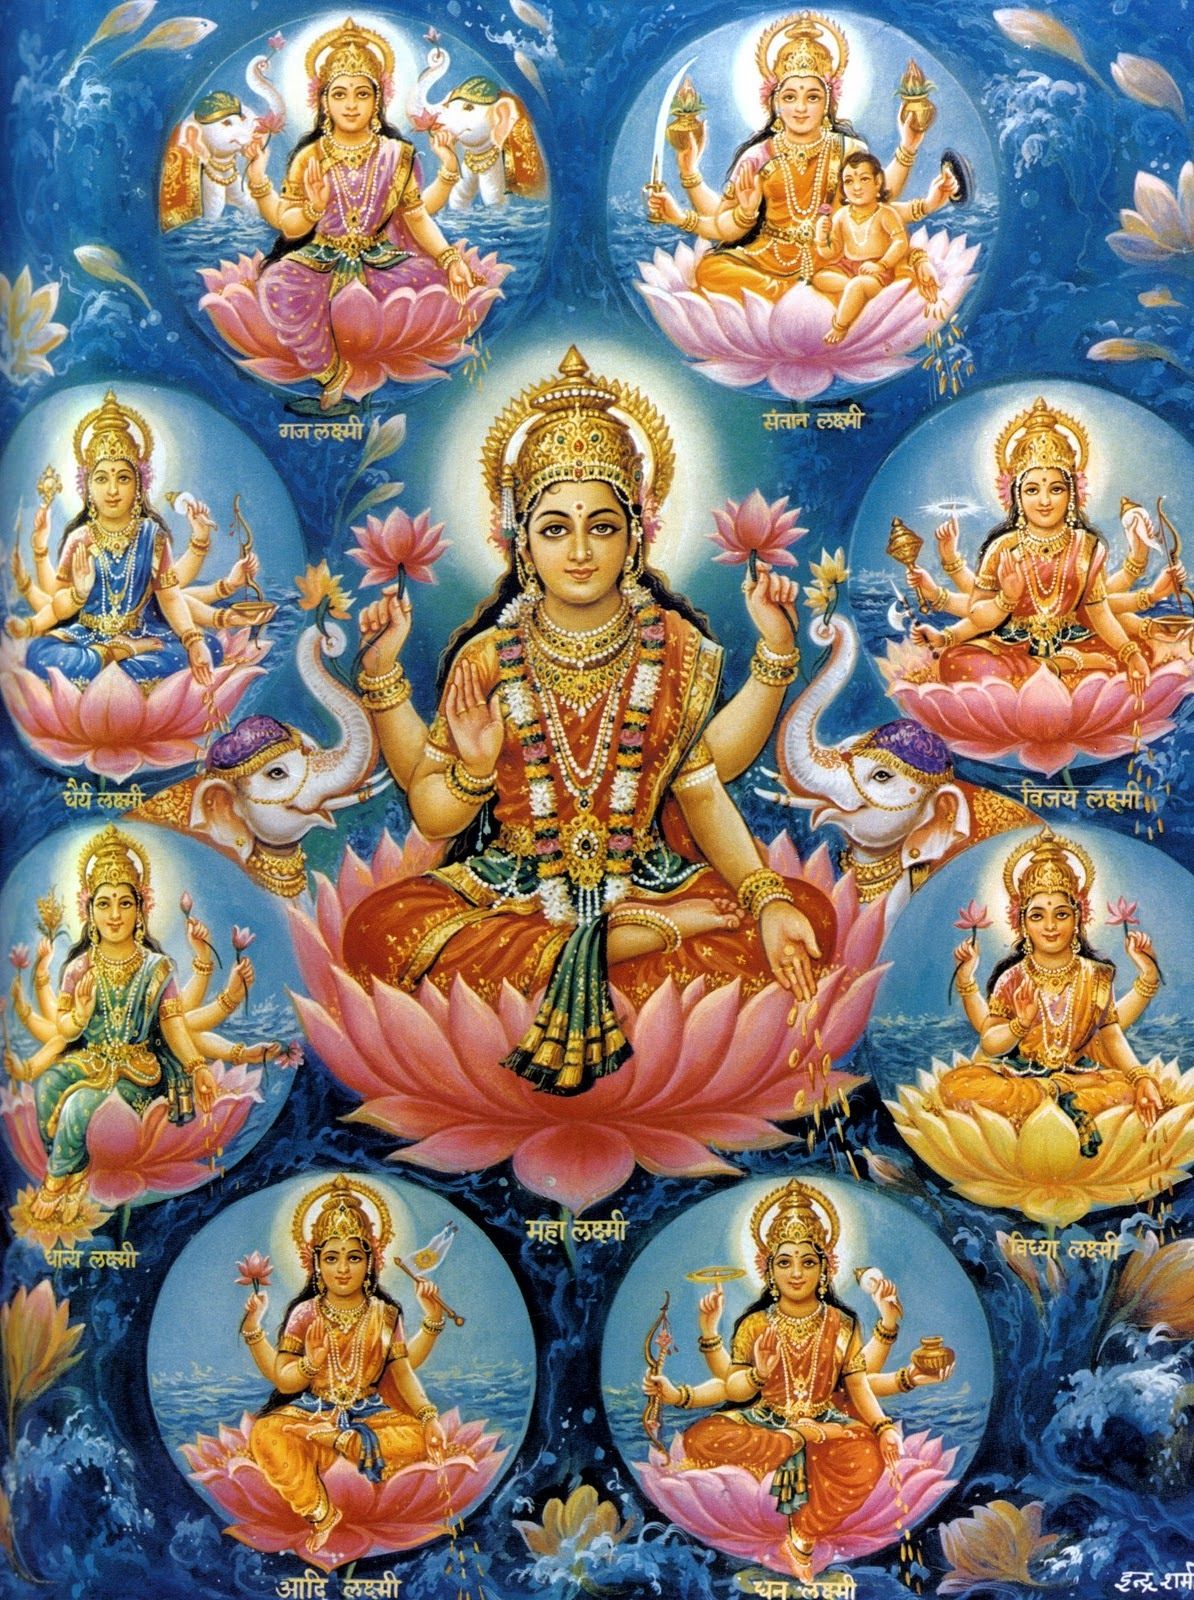 Ashta Lakshmi Devi Image HD wallpaper Picture photo Gallery Free Download. Hindu God Image